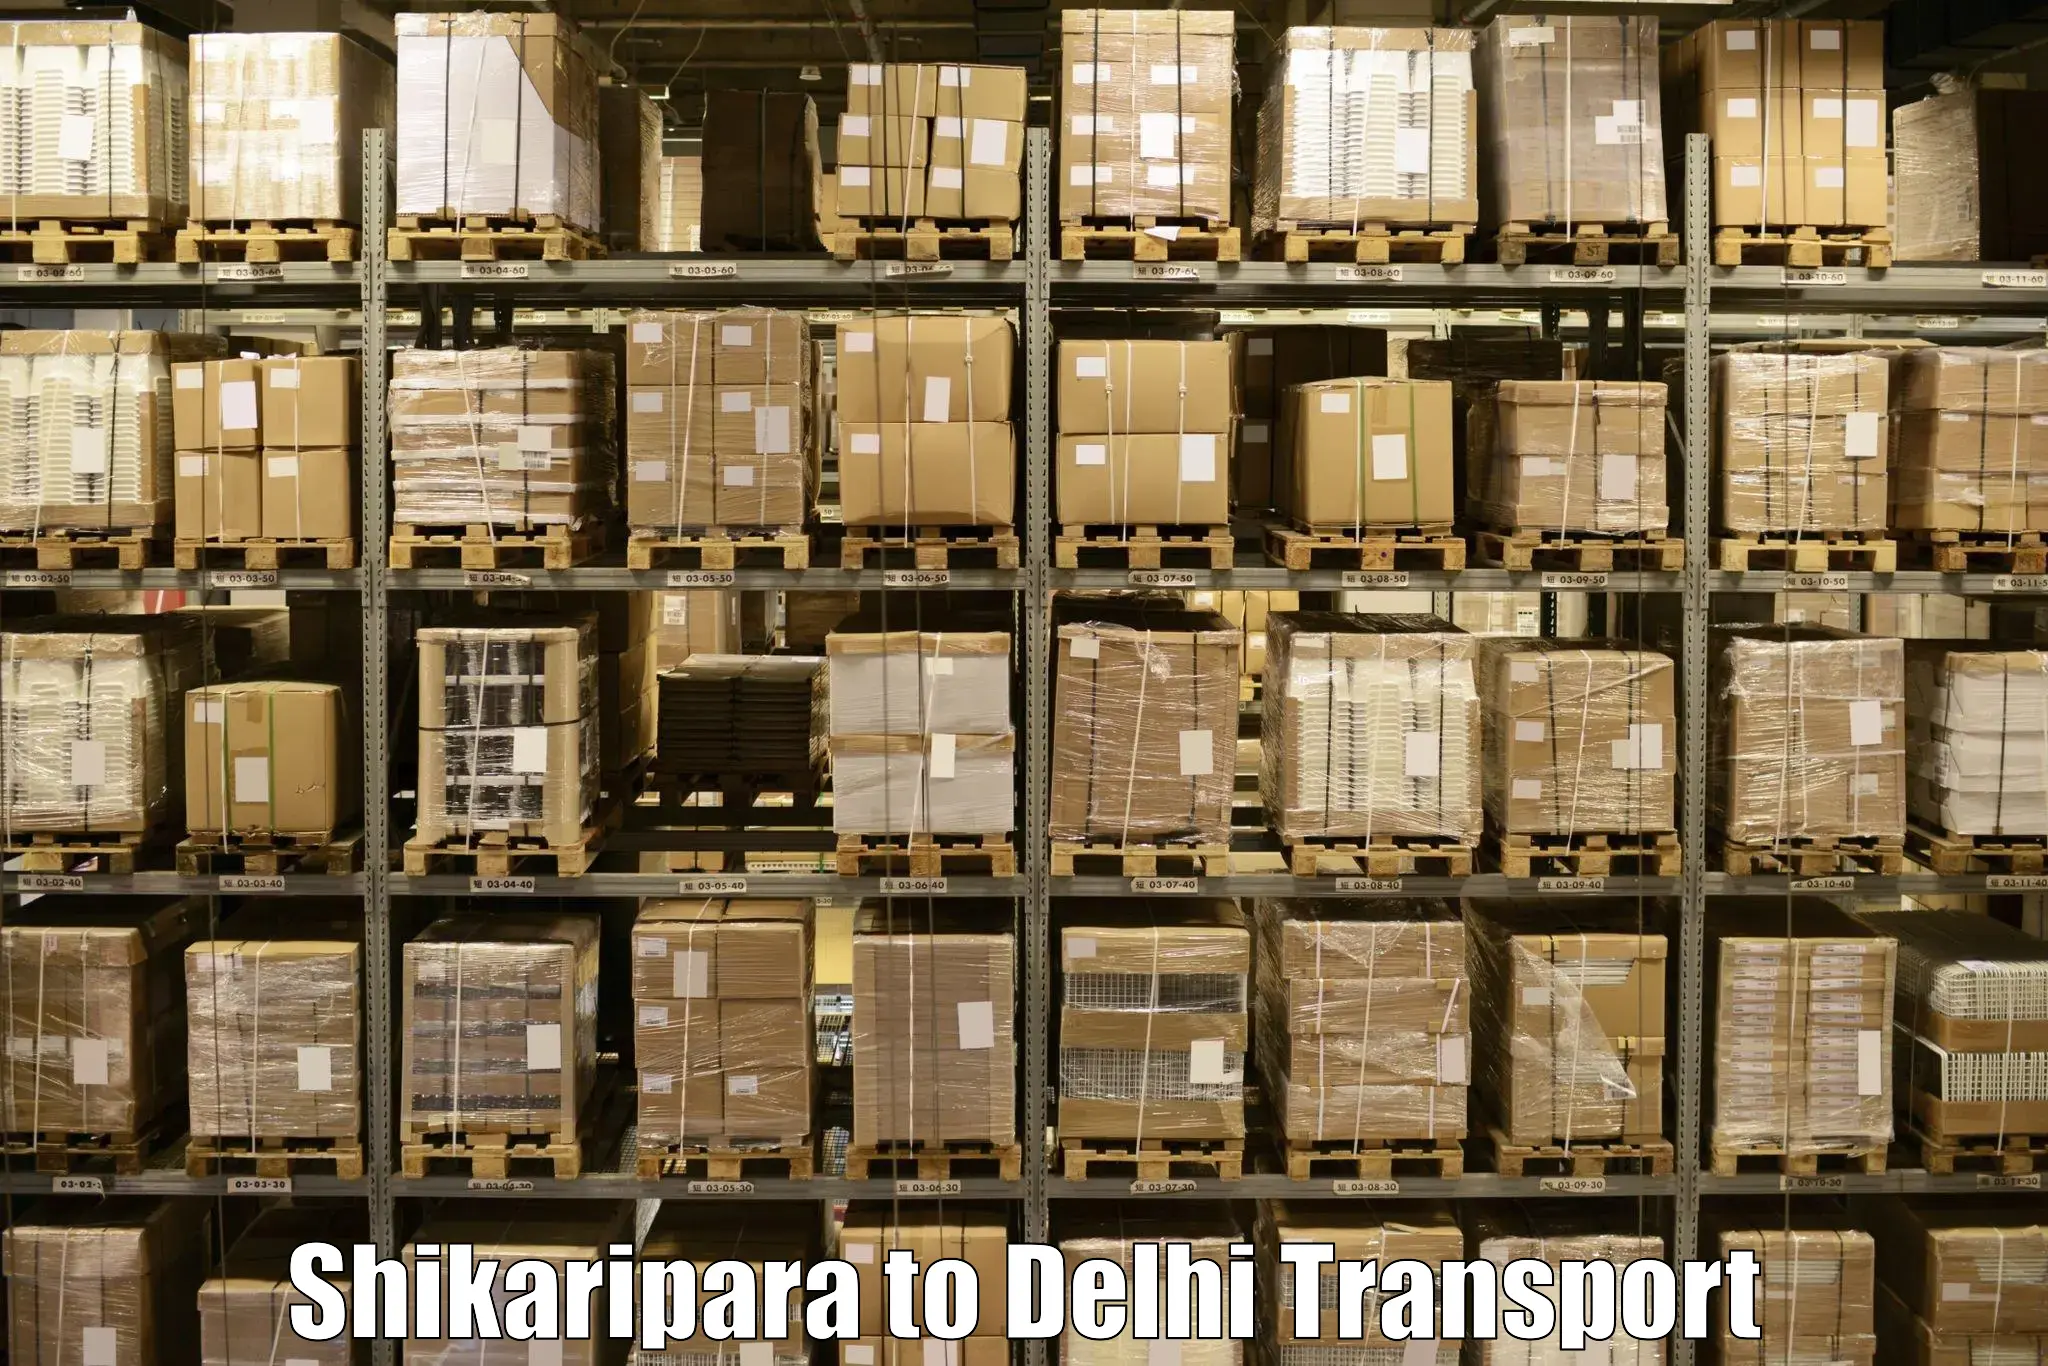 Transport in sharing in Shikaripara to Sarojini Nagar